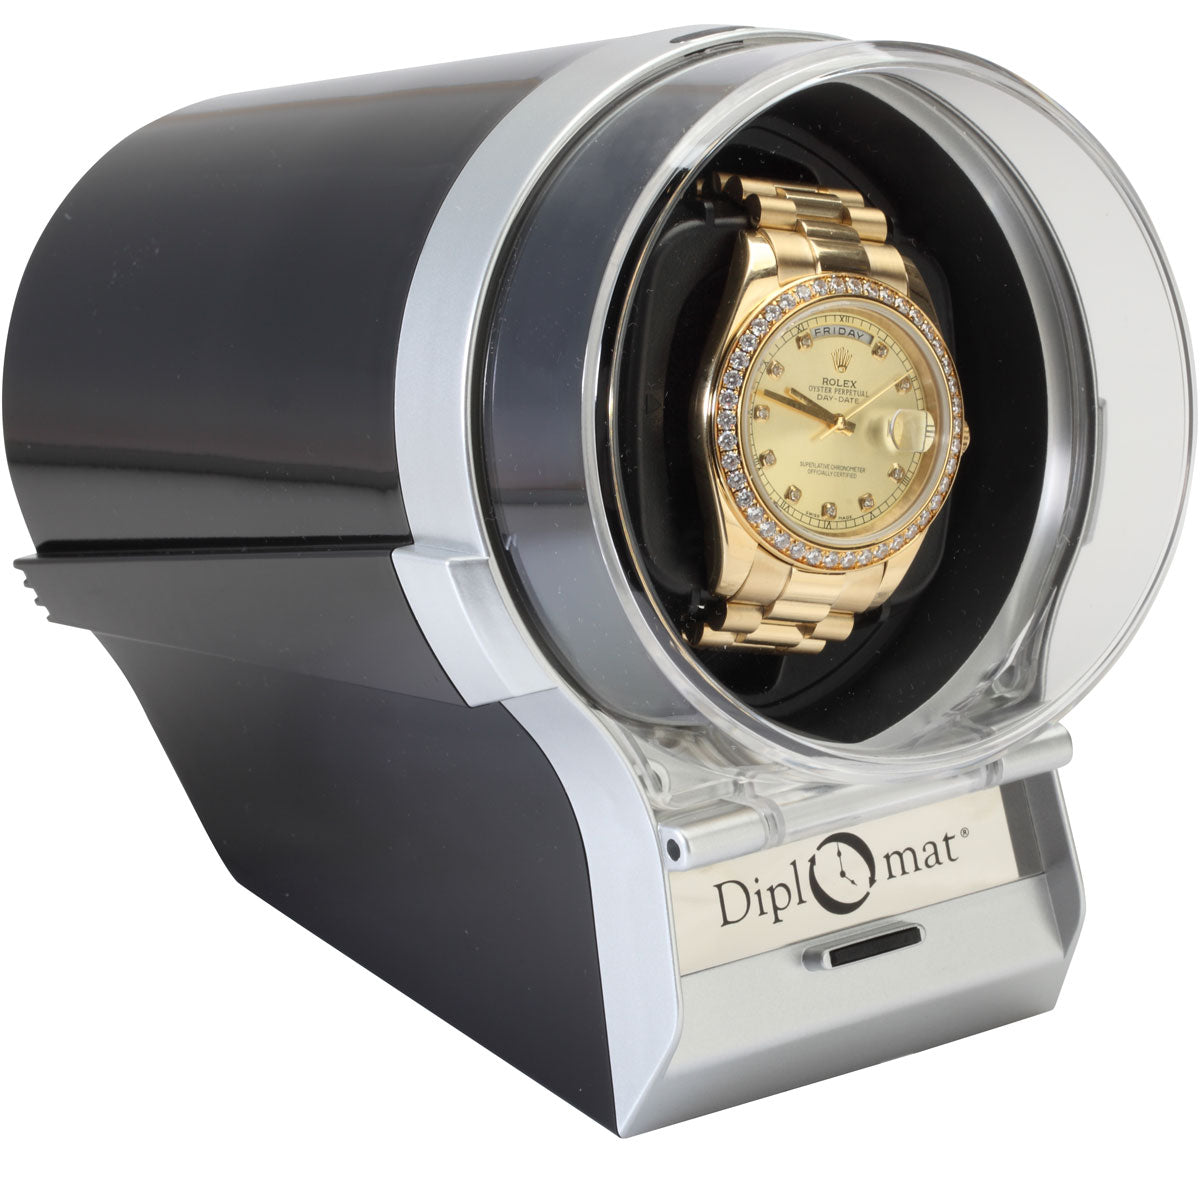 Diplomat "Economy" Barrel-Shaped Single Watch Winder